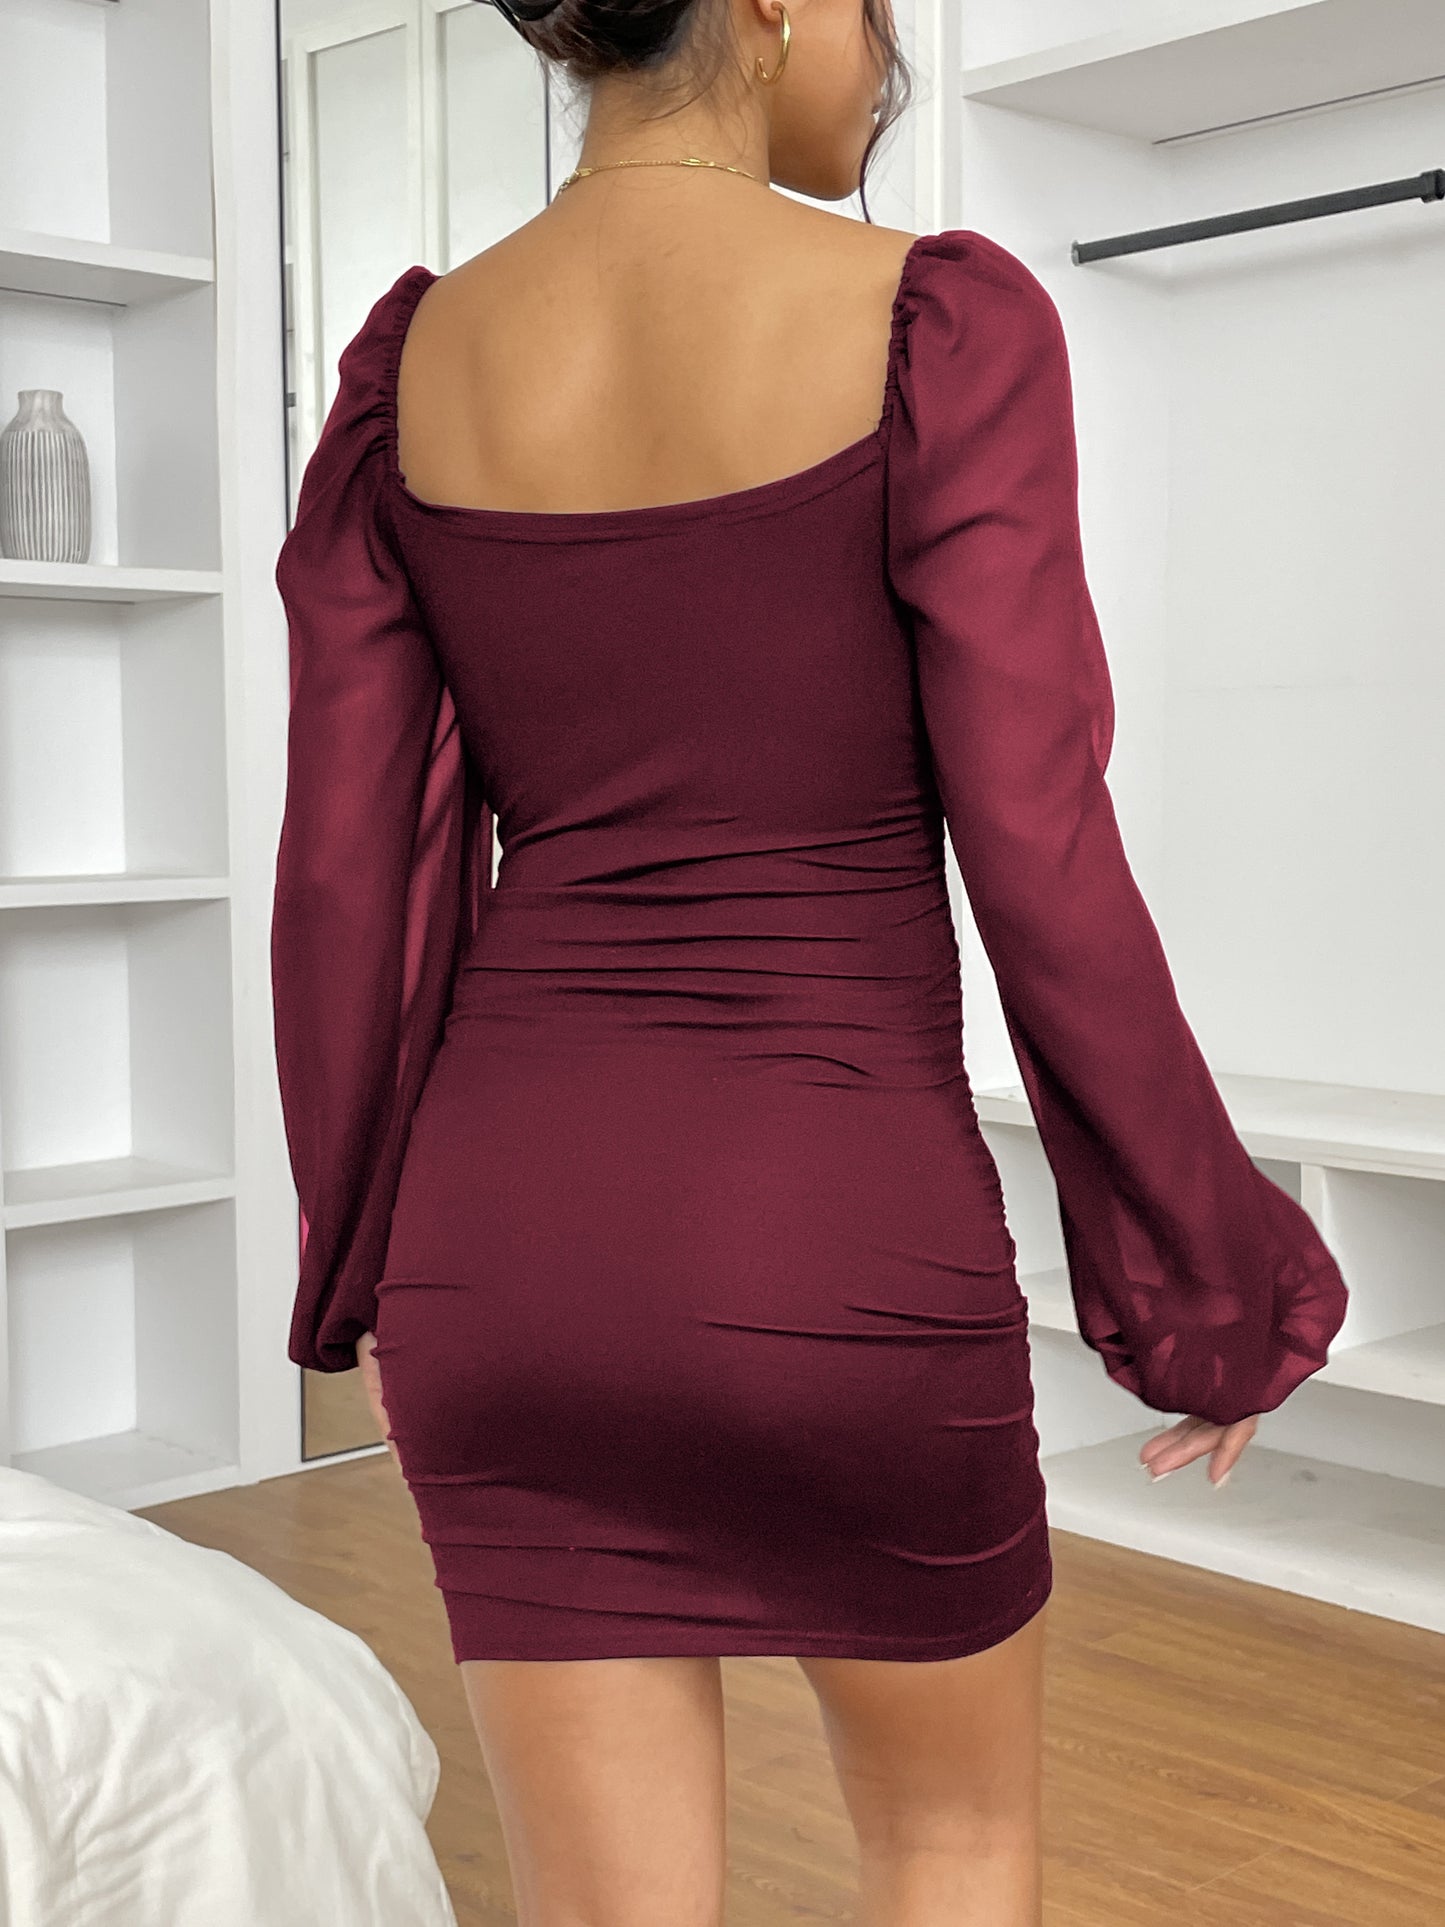 Antmvs Squared Neck Mesh Long Sleeve Dress, Solid Elegant Bodycon Mini Dress, Women's Clothing